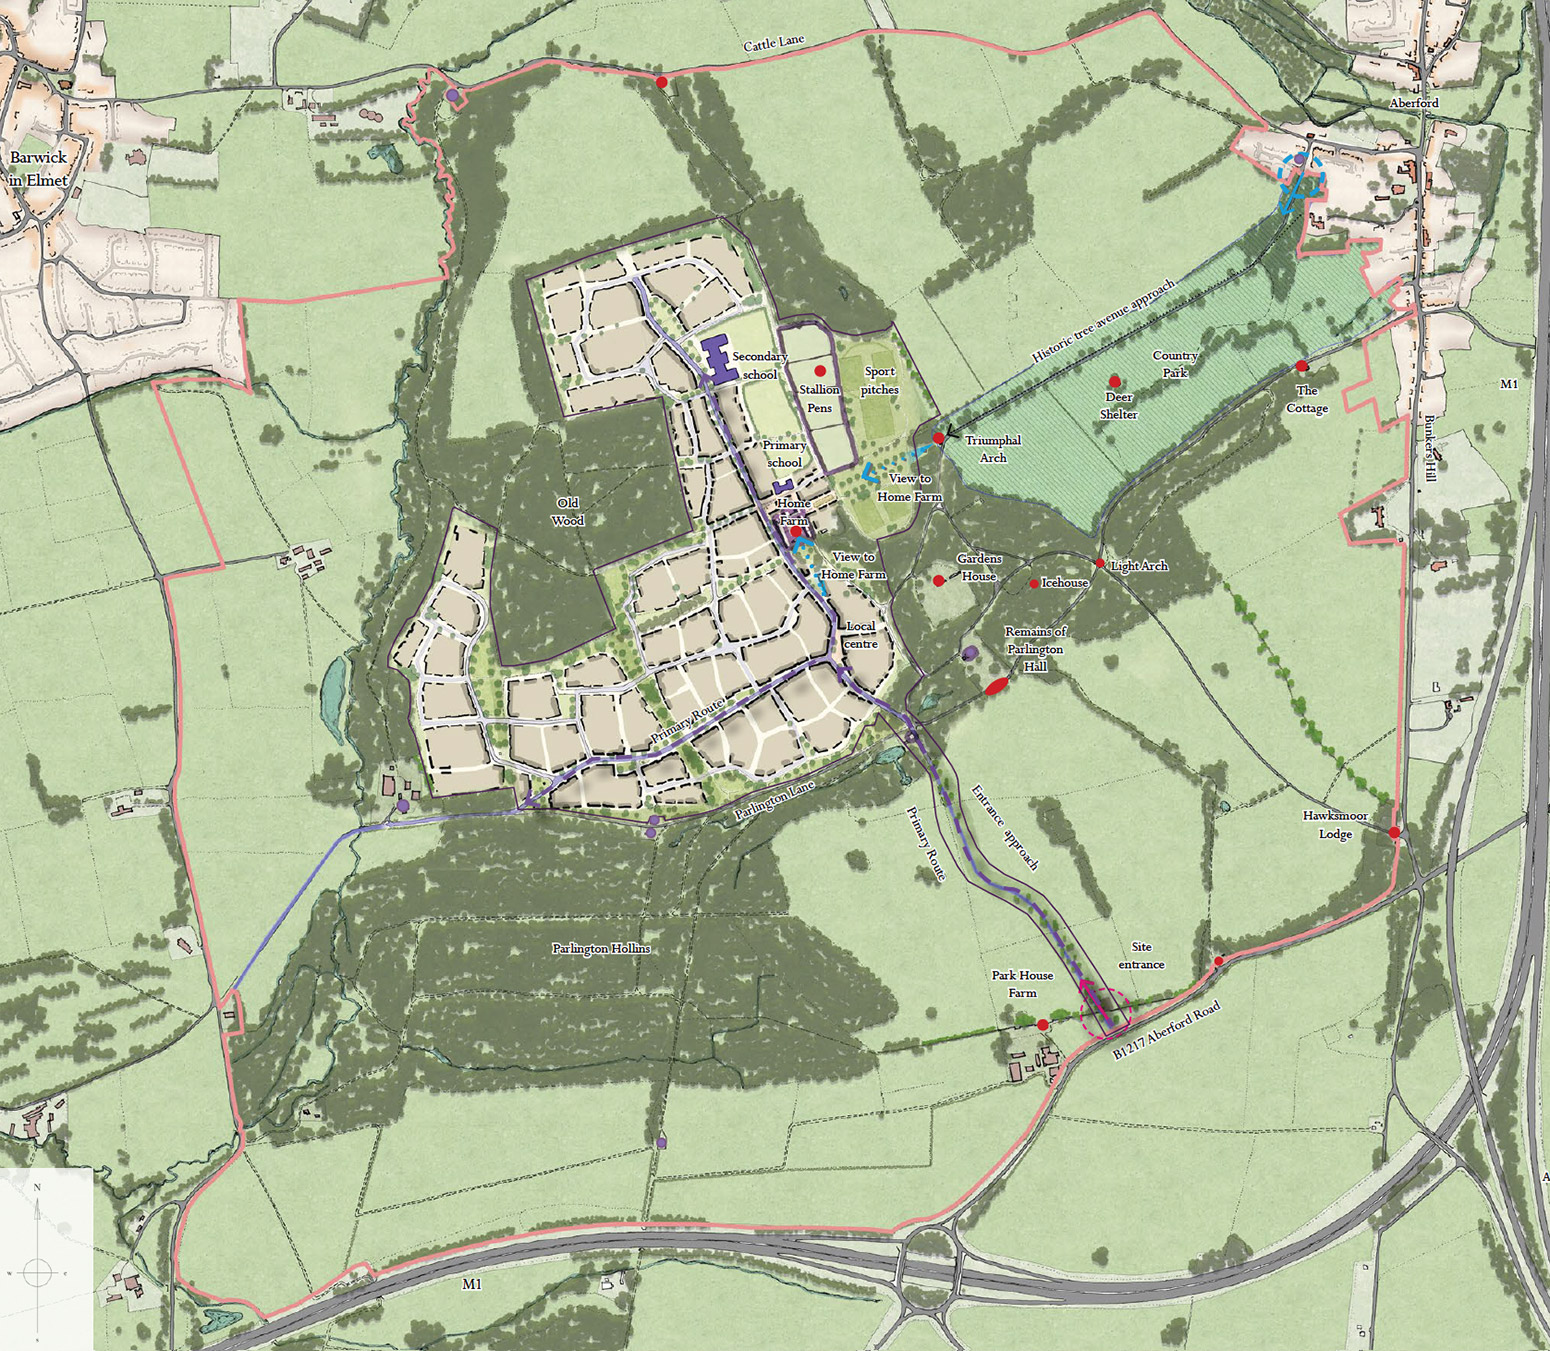 Illustrated masterplan of Parlington Village